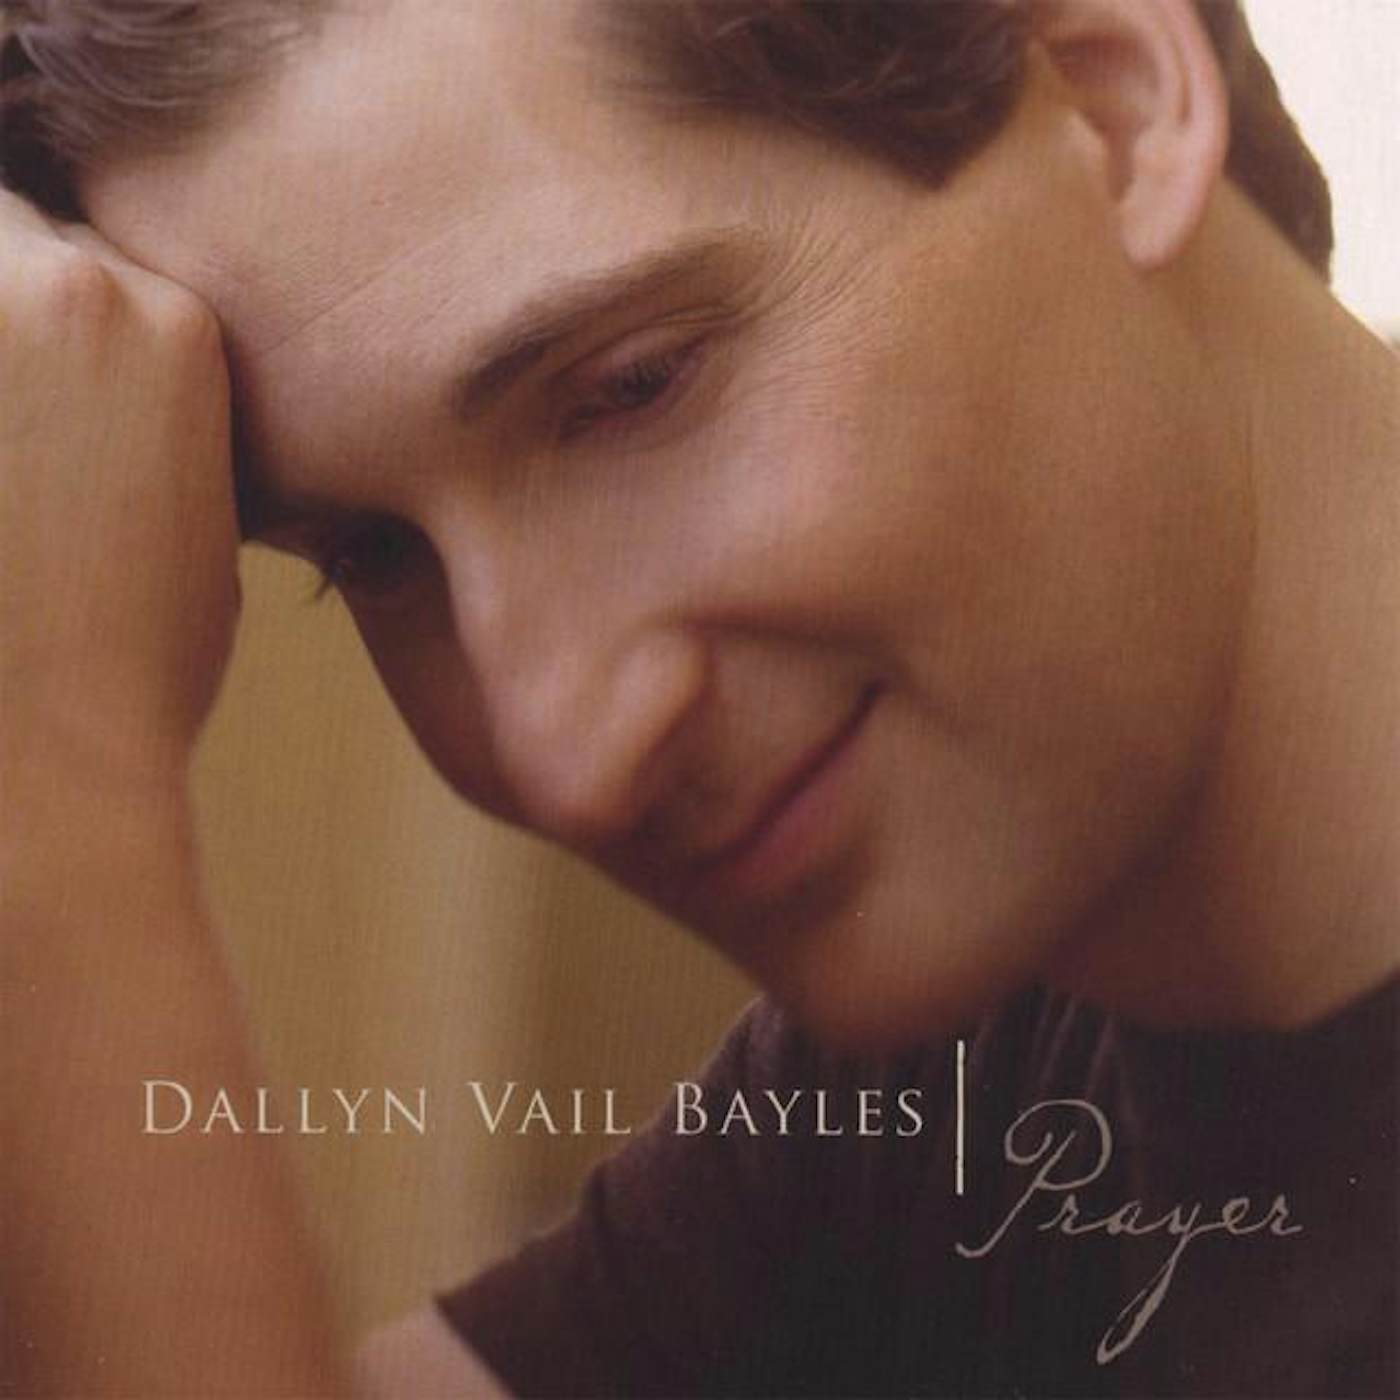 Dallyn Vail Bayles